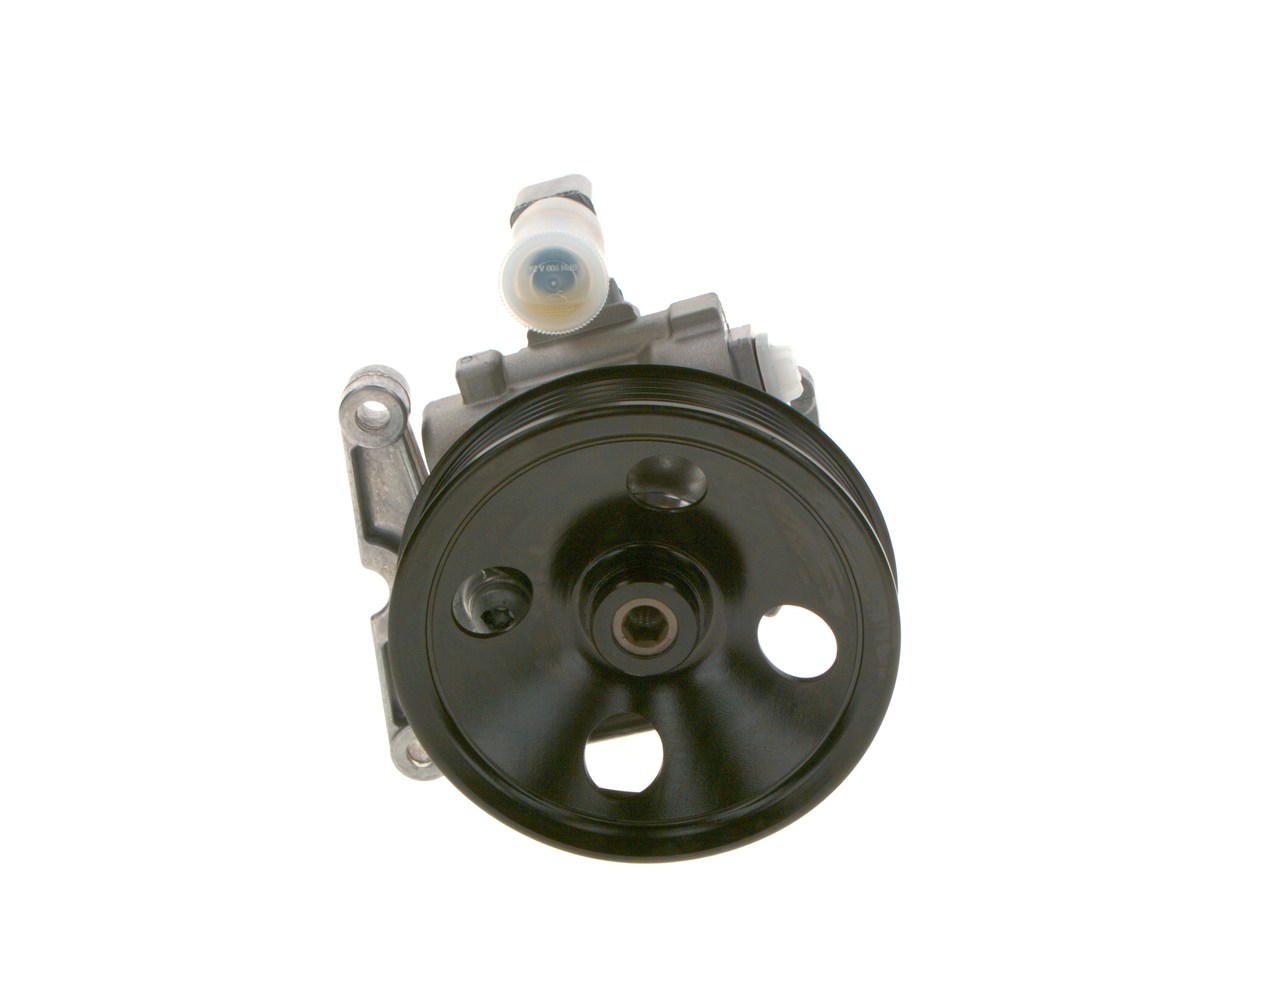 BOSCH K S00 000 623 Power steering pump Hydraulic, 100 bar, Vane Pump, Clockwise rotation